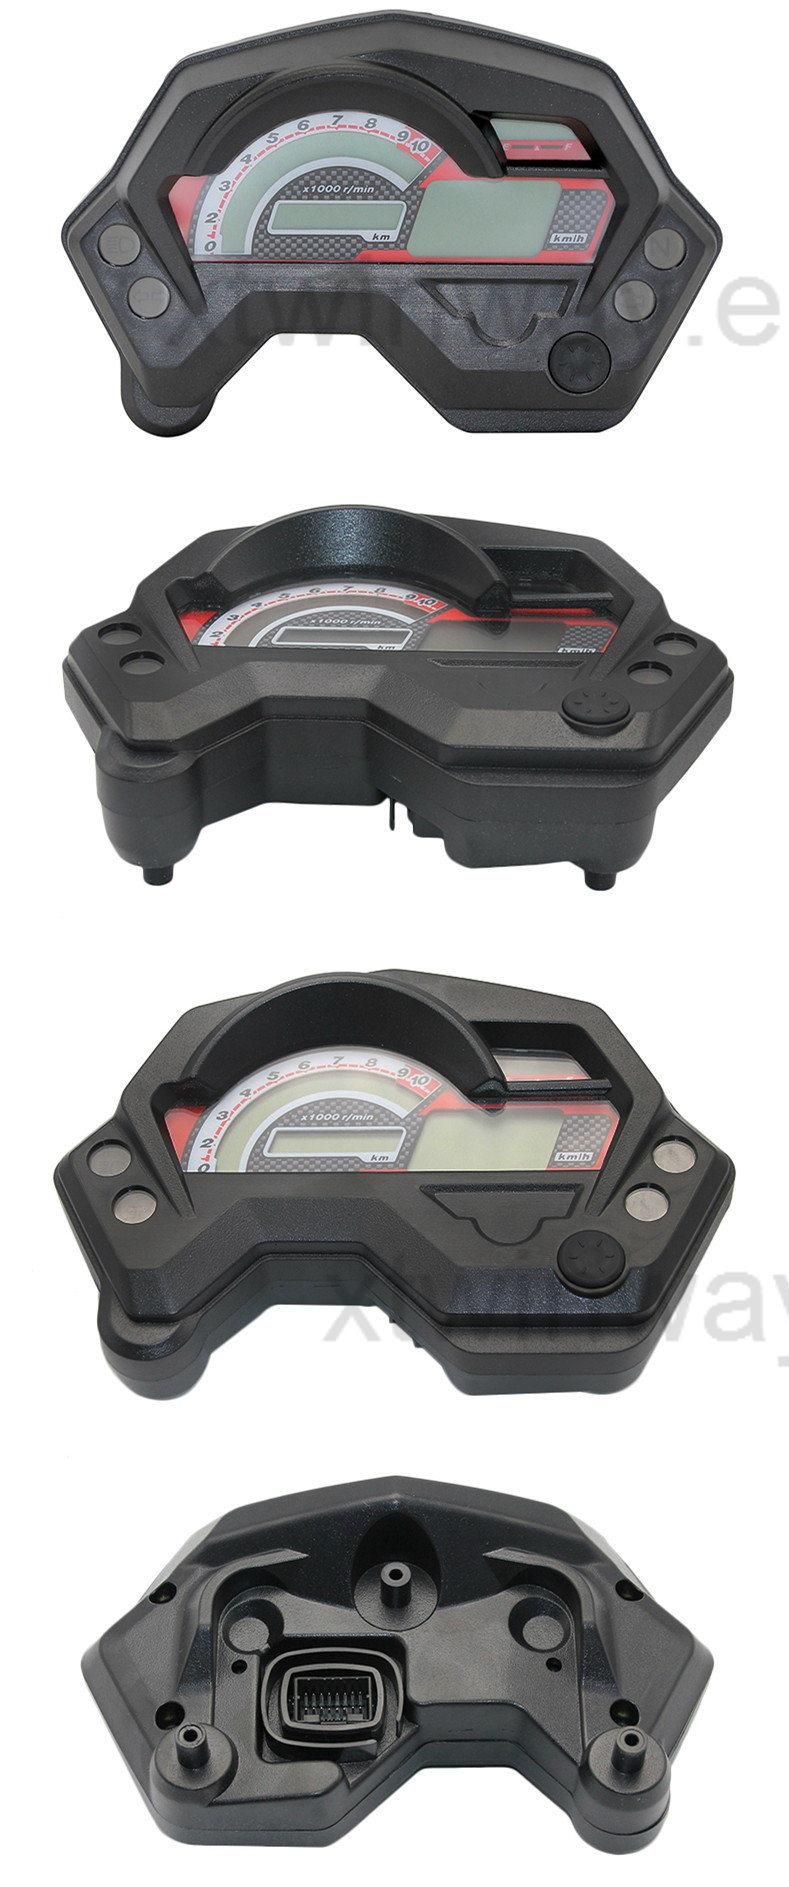 Ww-3037 Motorcycle Parts Instrument Speedometer